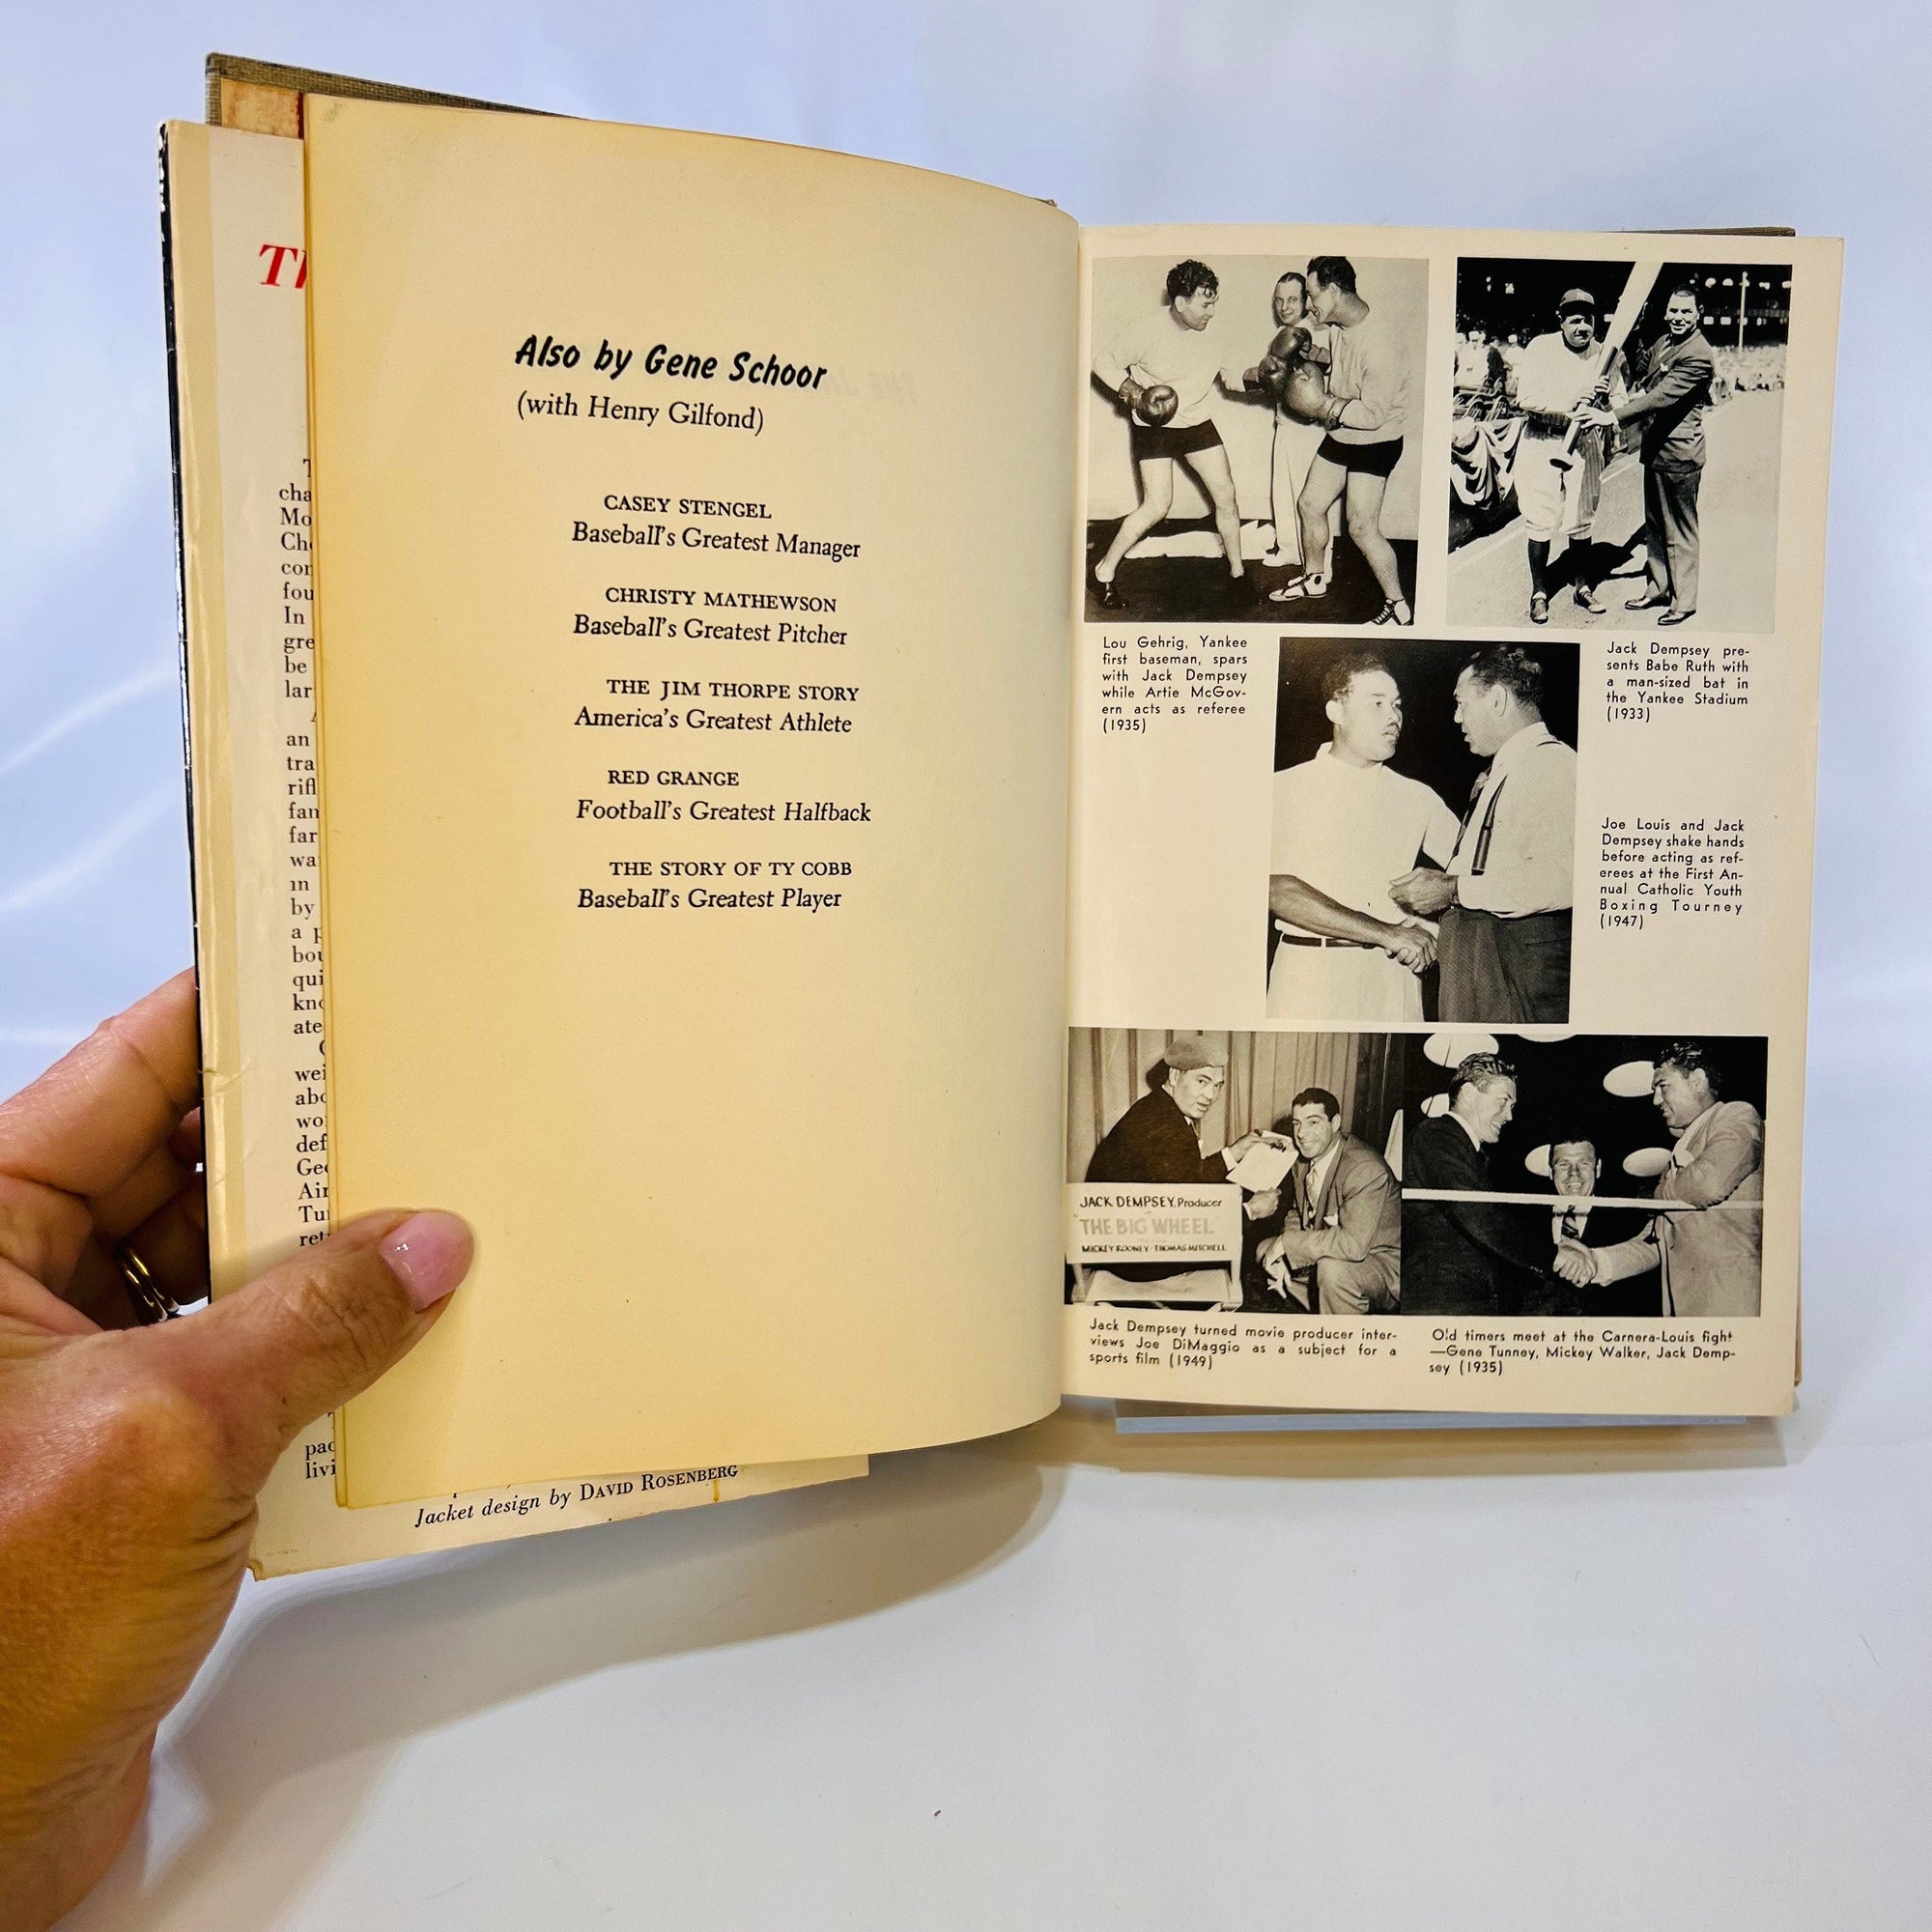 The Jack Dempsey Story by Gene Schoor 1954 Julian Messner,Inc Vintage Book